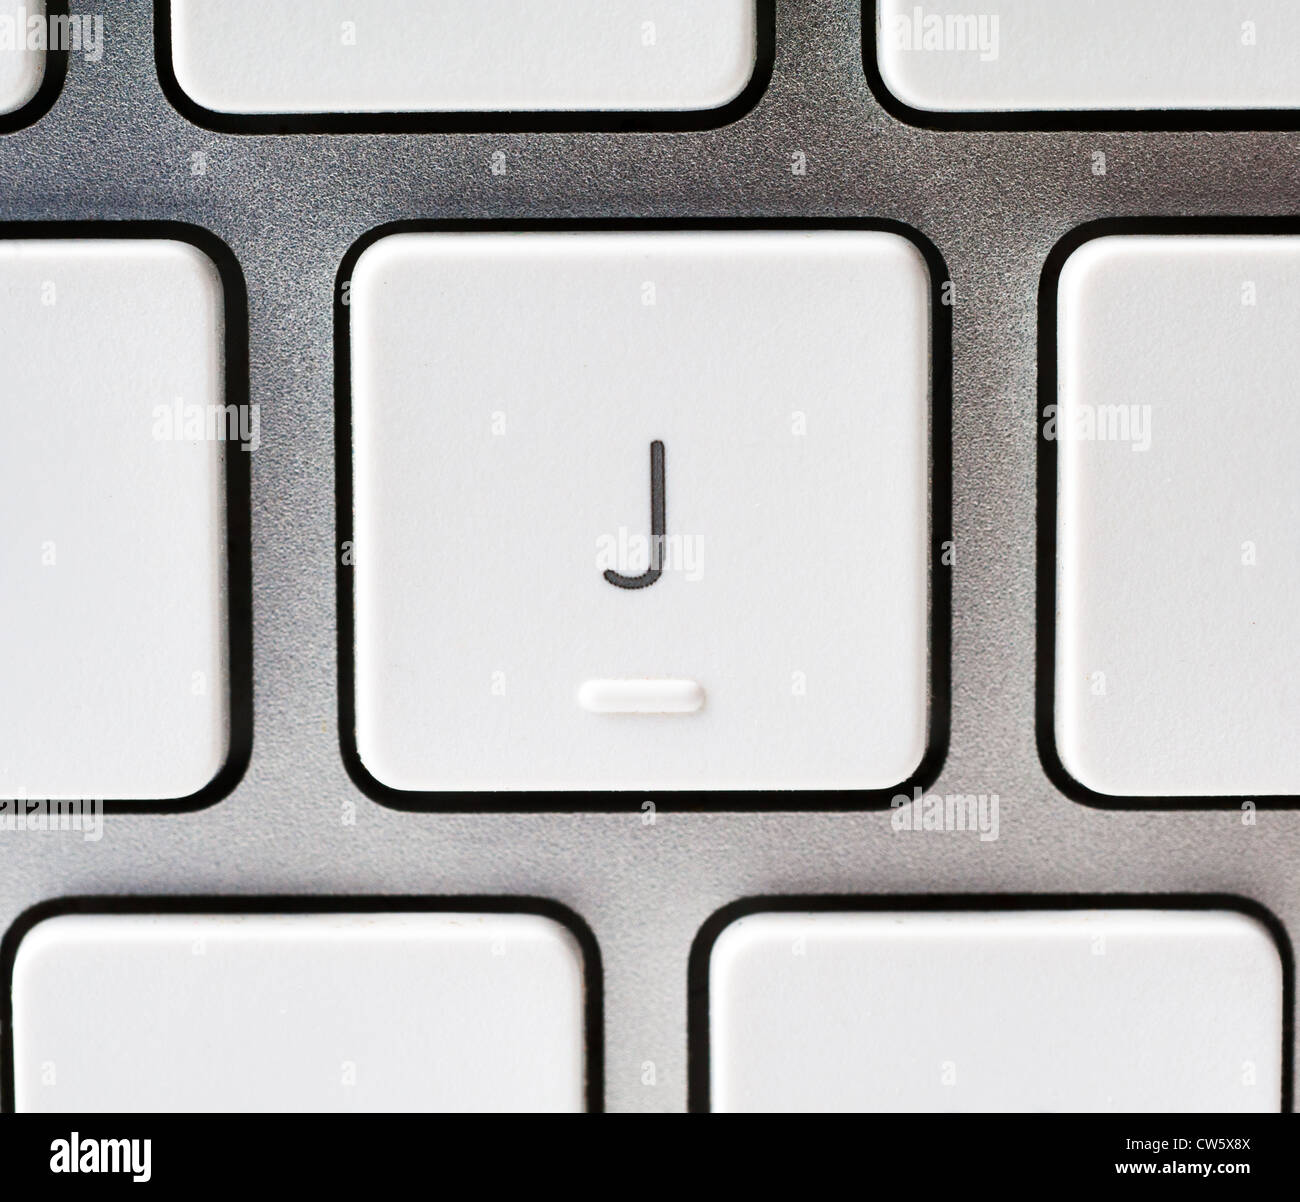 Letter J on an Apple keyboard Stock Photo